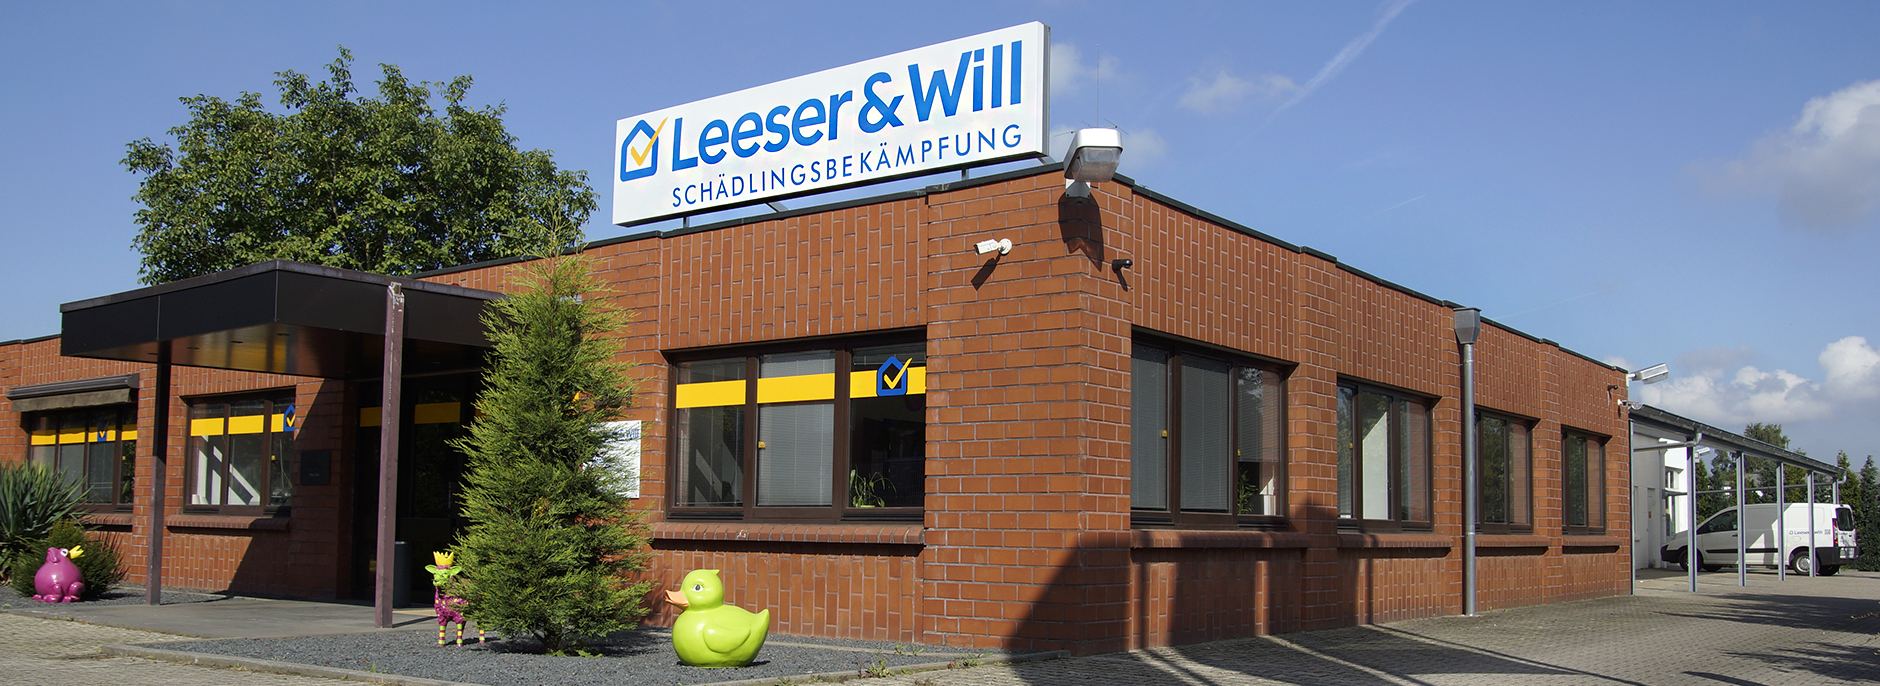 Leeser & Will Schädlingsbekämpfung GmbH - Logo Tür